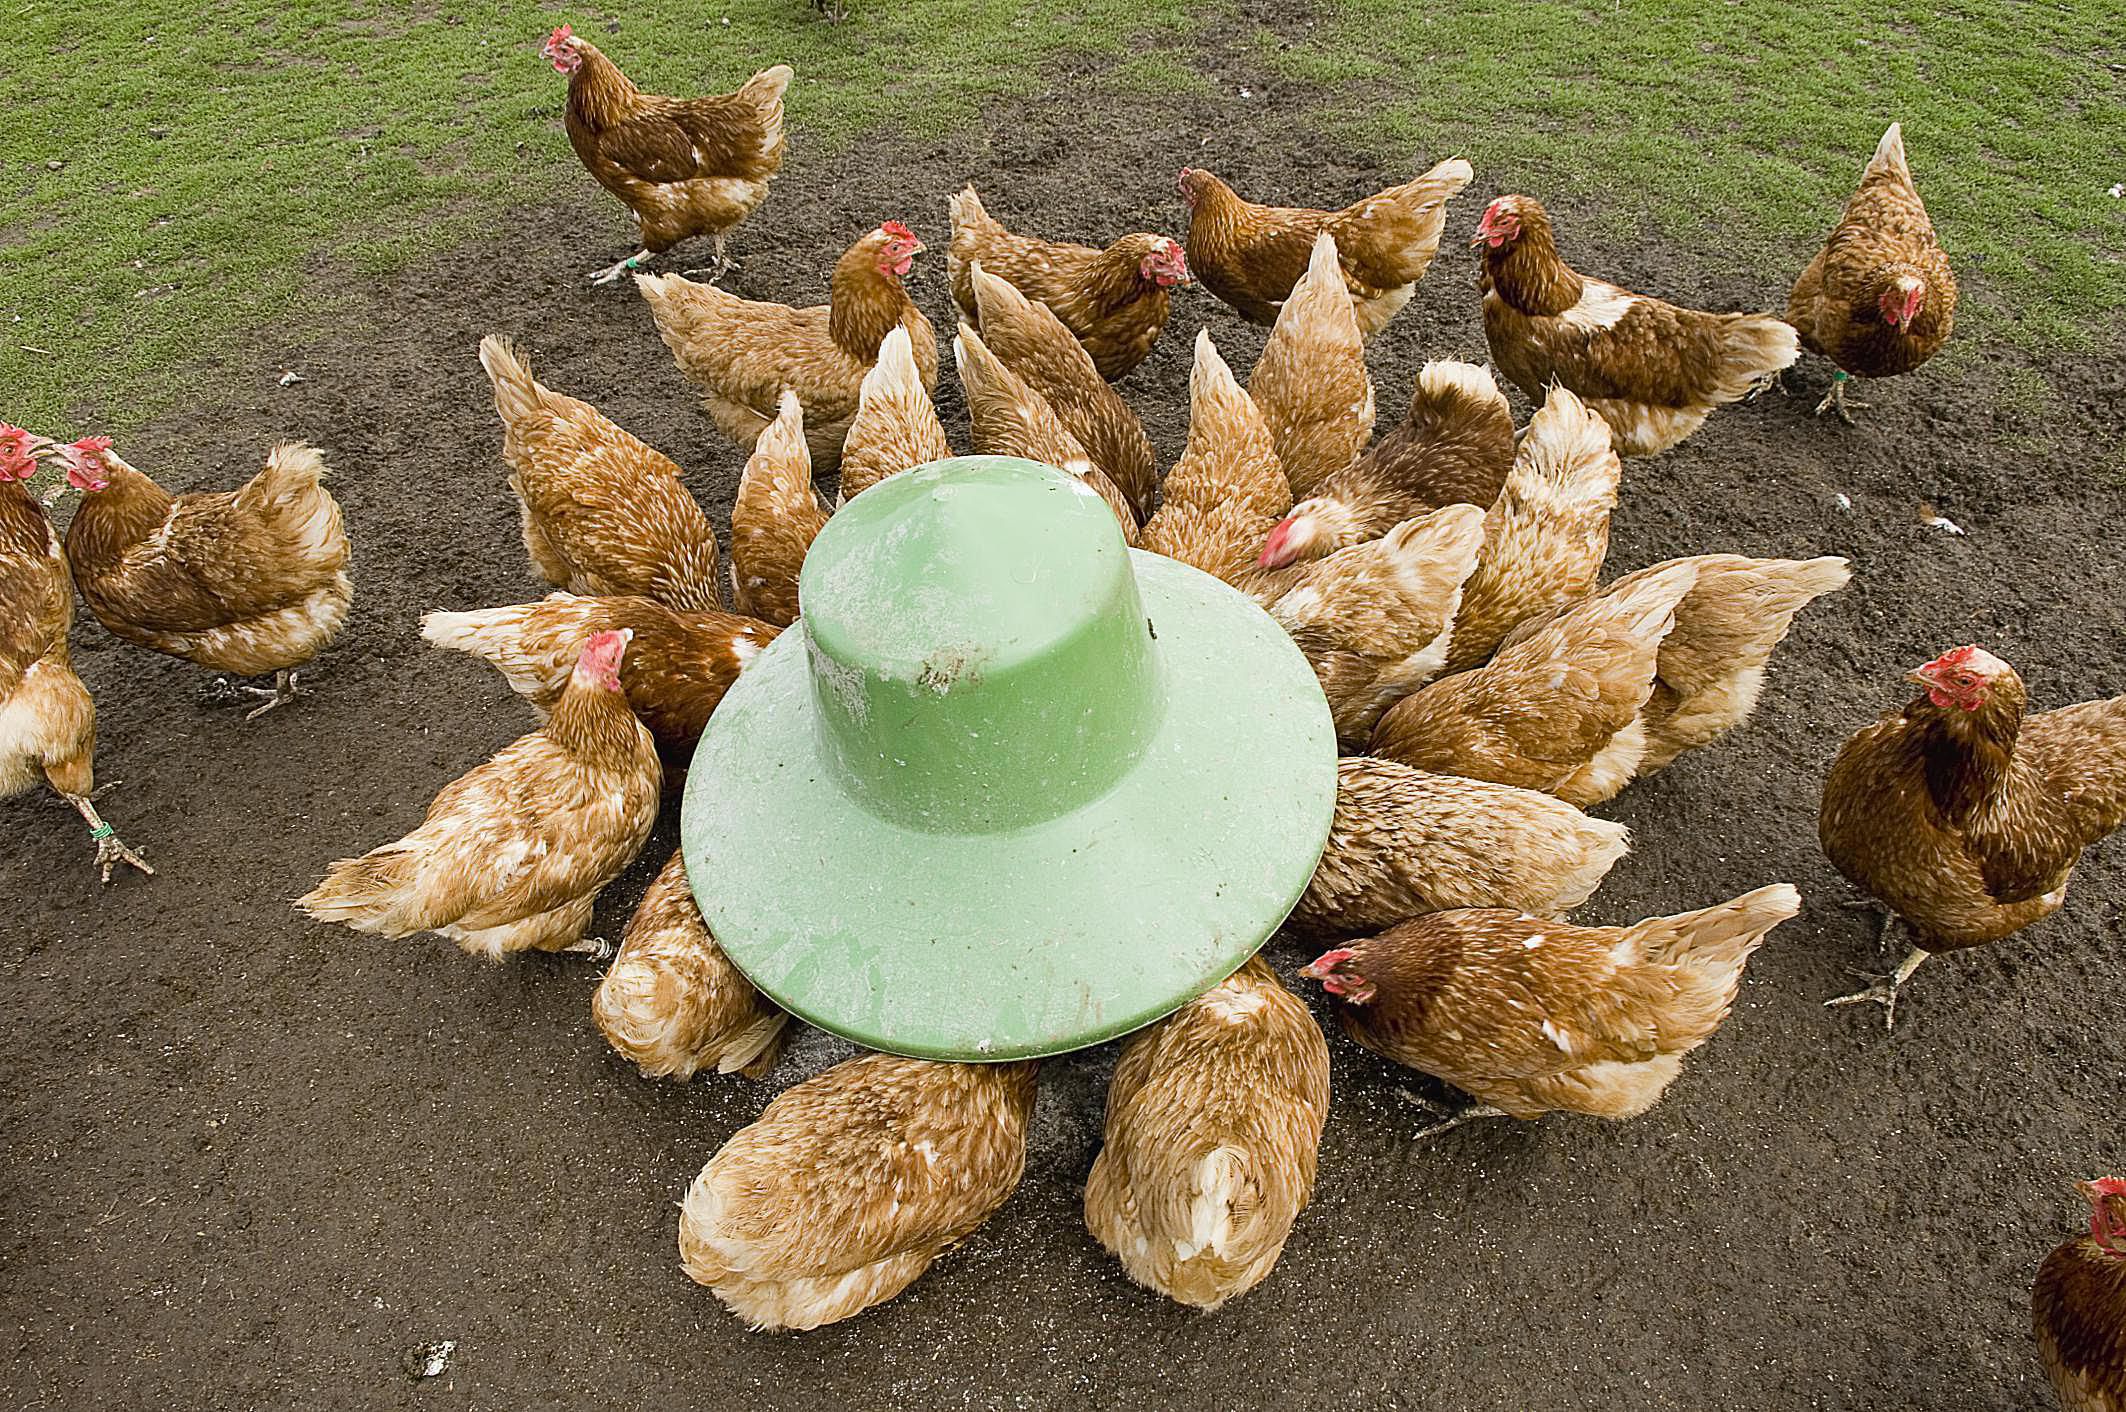 Raising Chicken Supplies - Small Farms